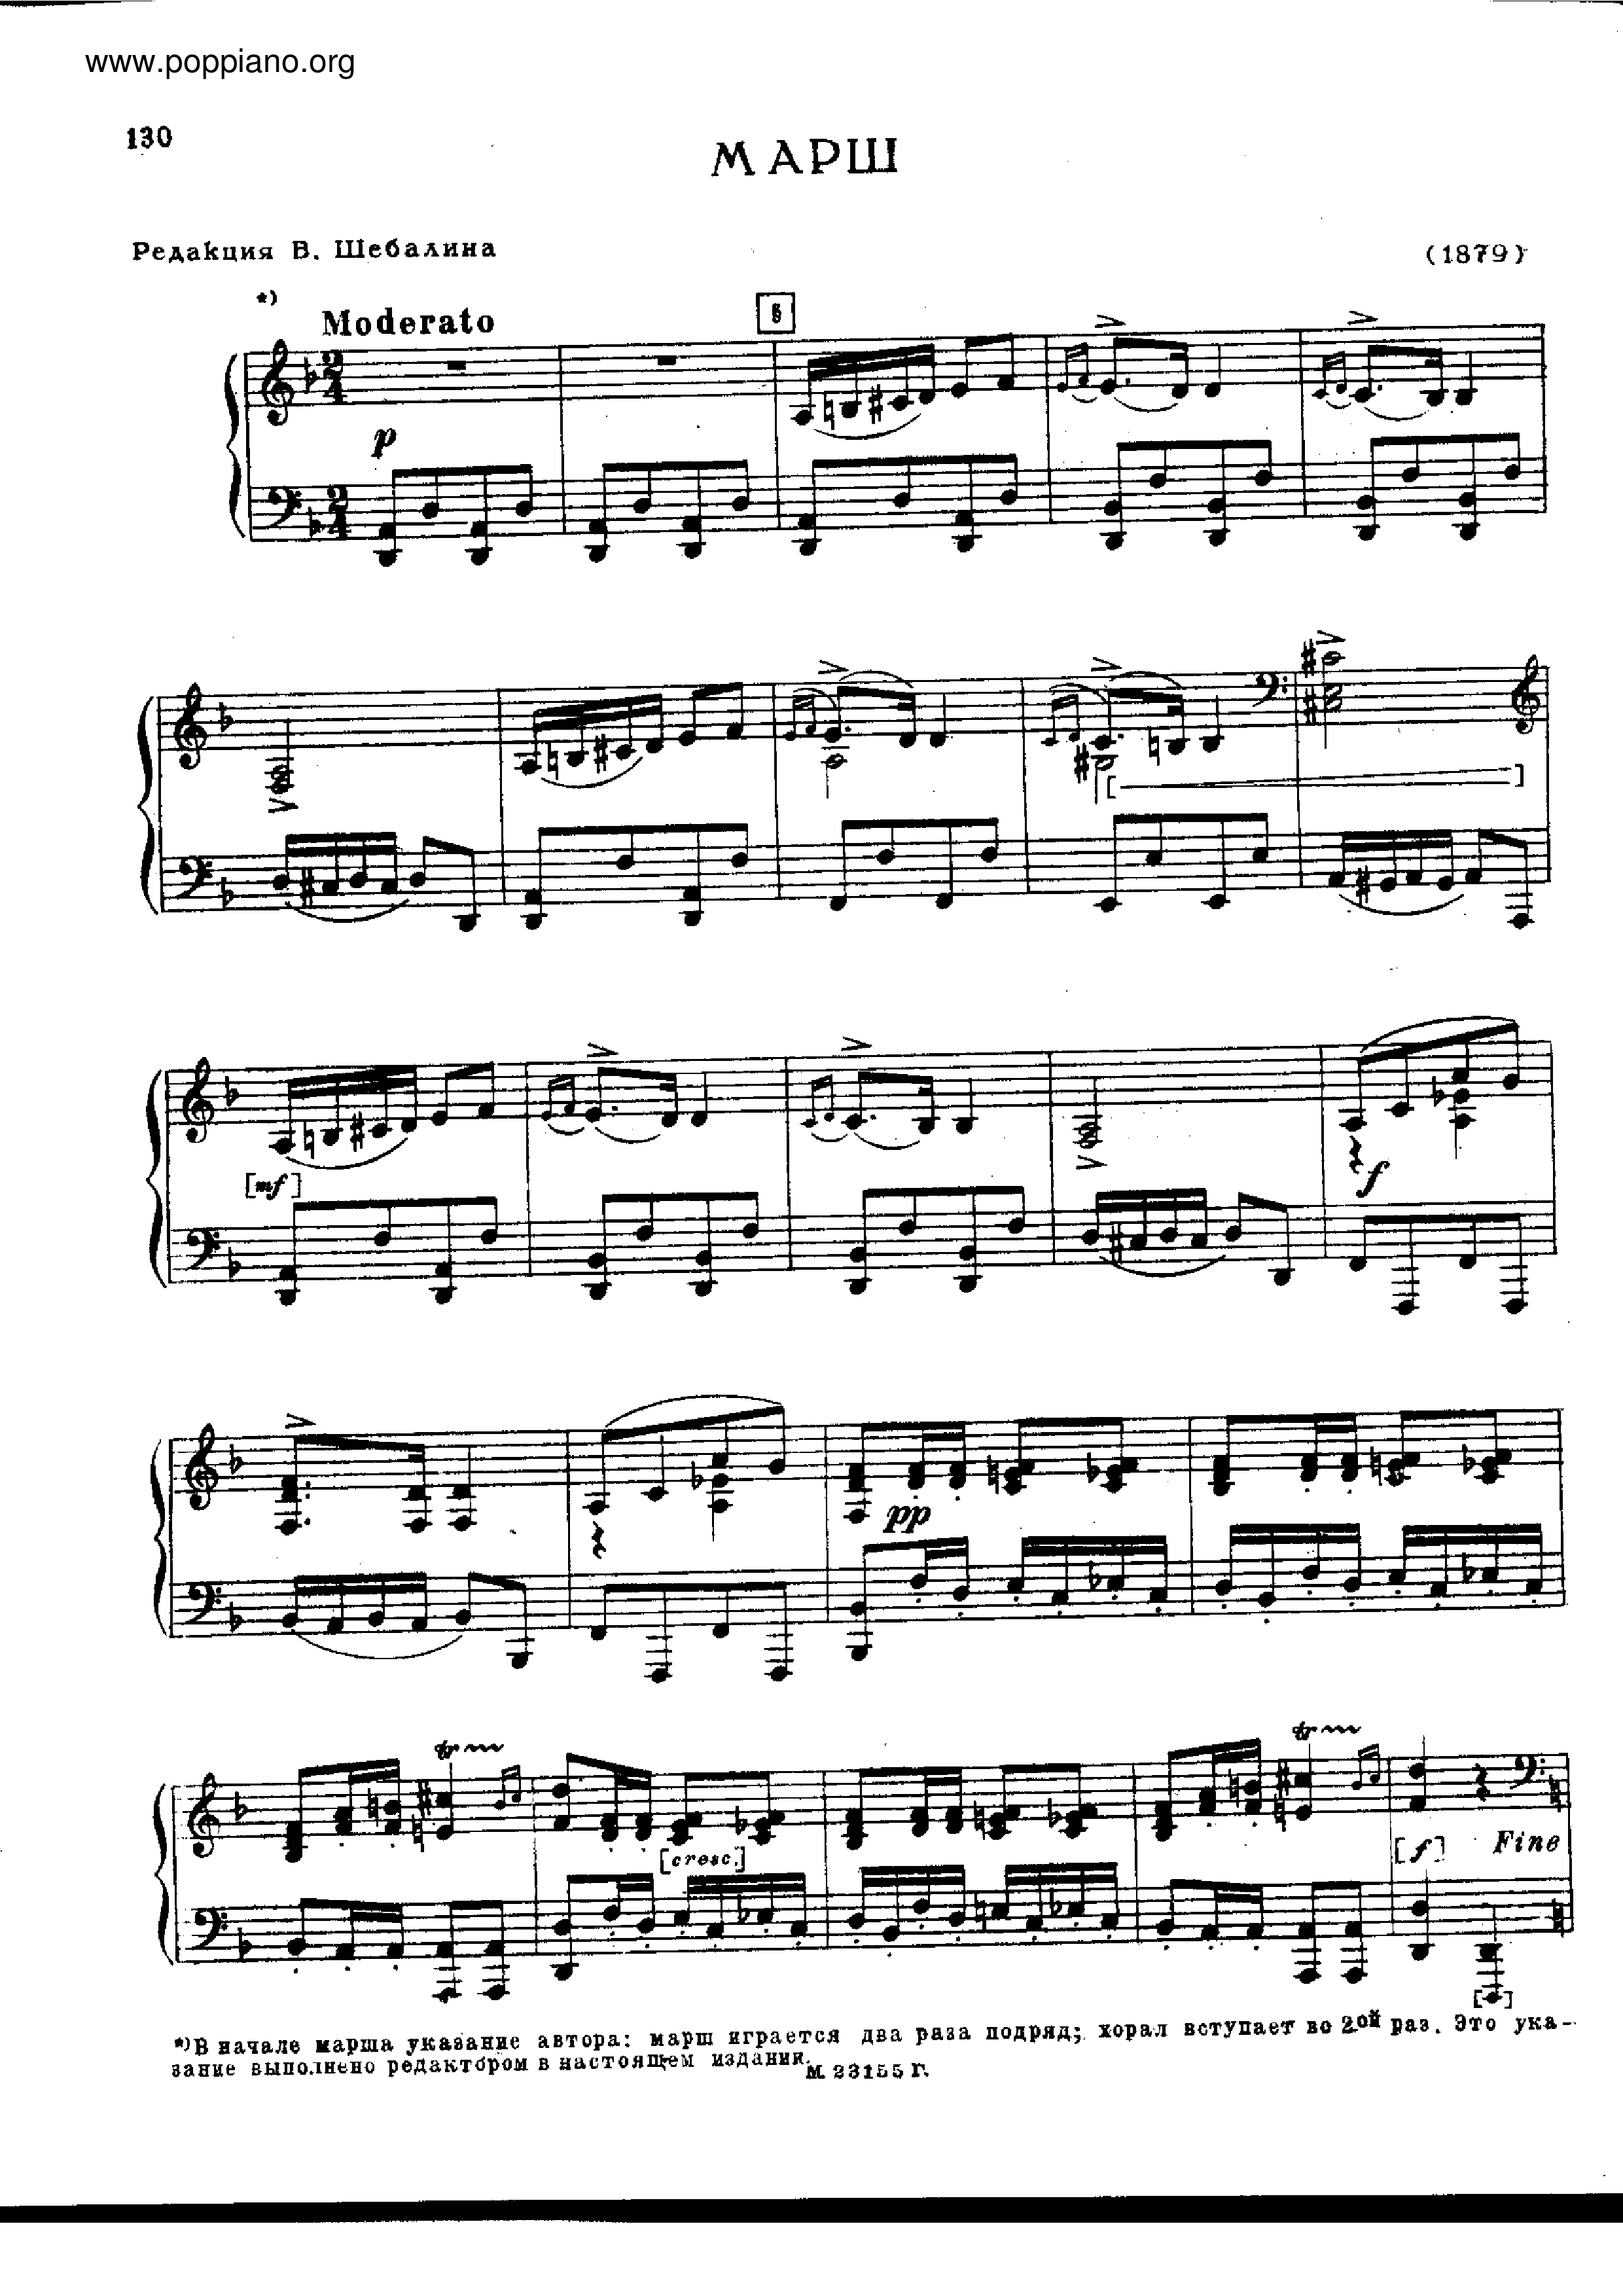 No.2ピアノ譜